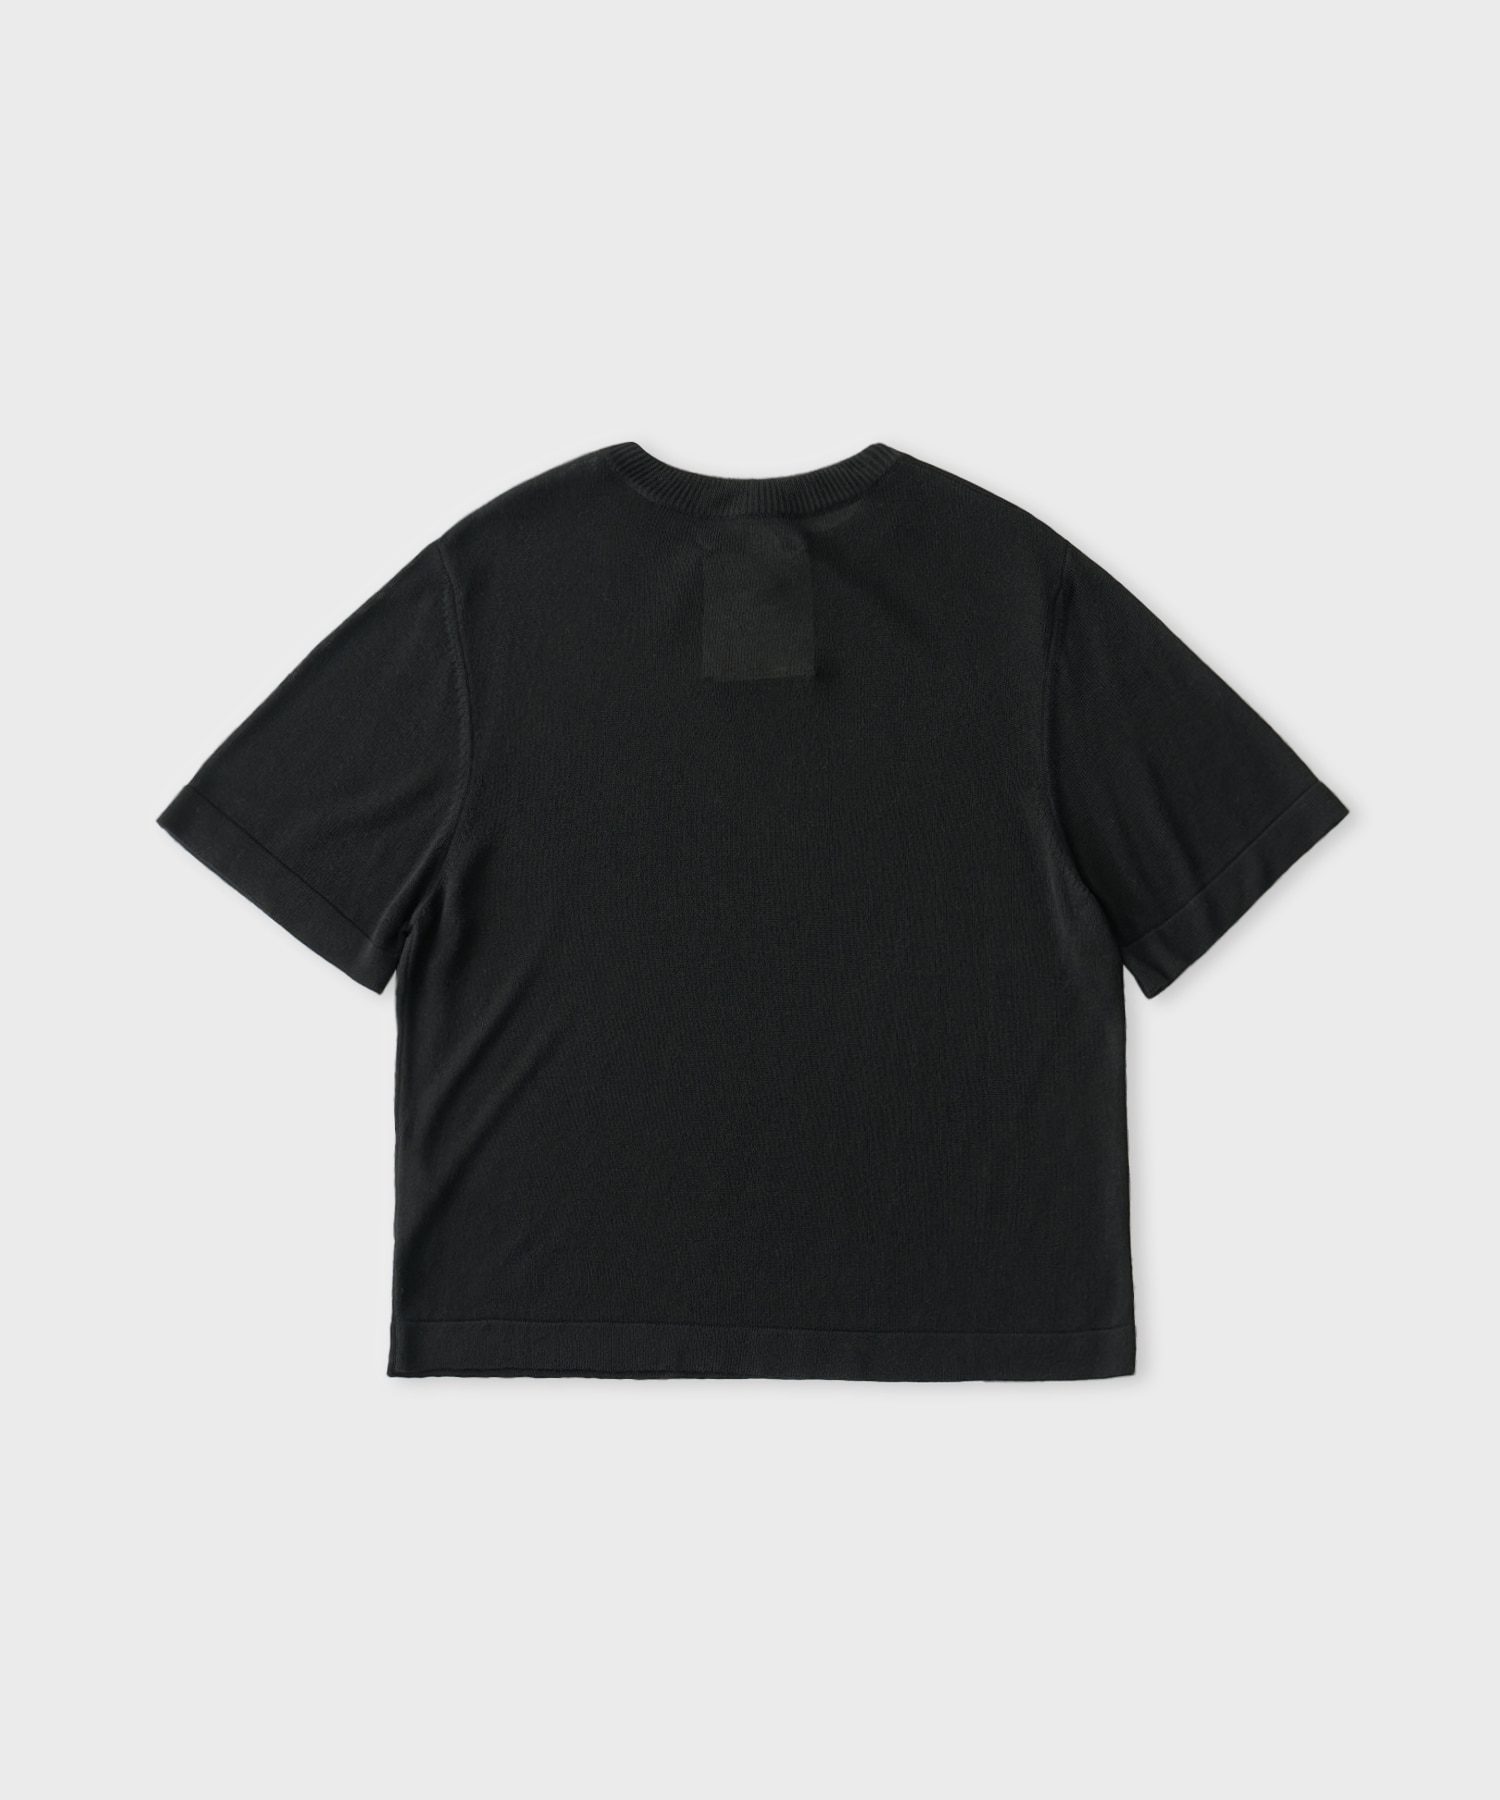 Viscose T-shirt (Black)